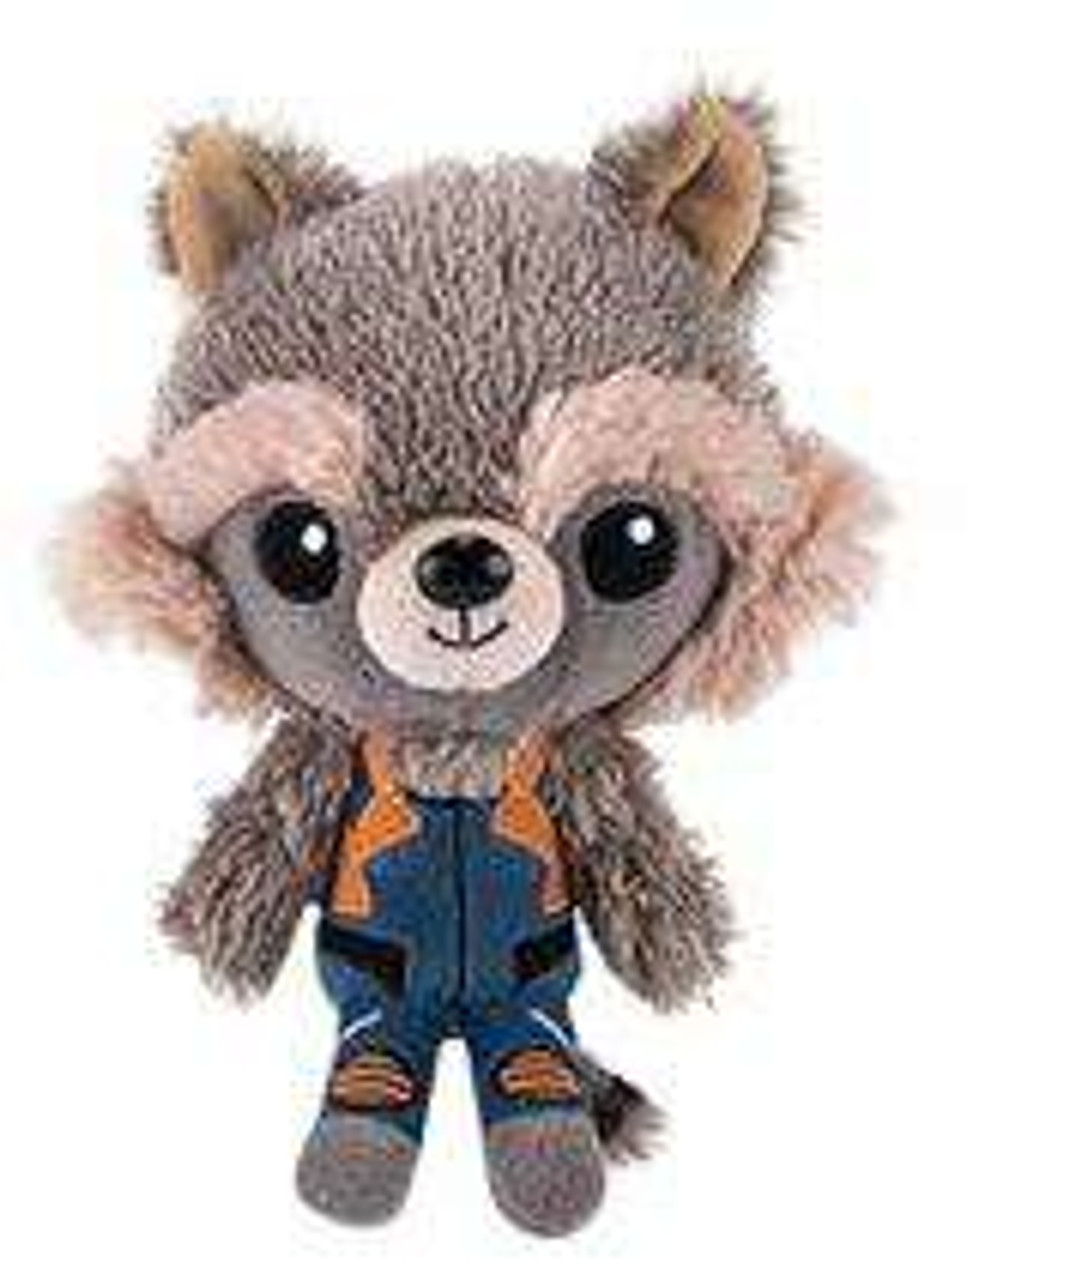 rocket raccoon plush